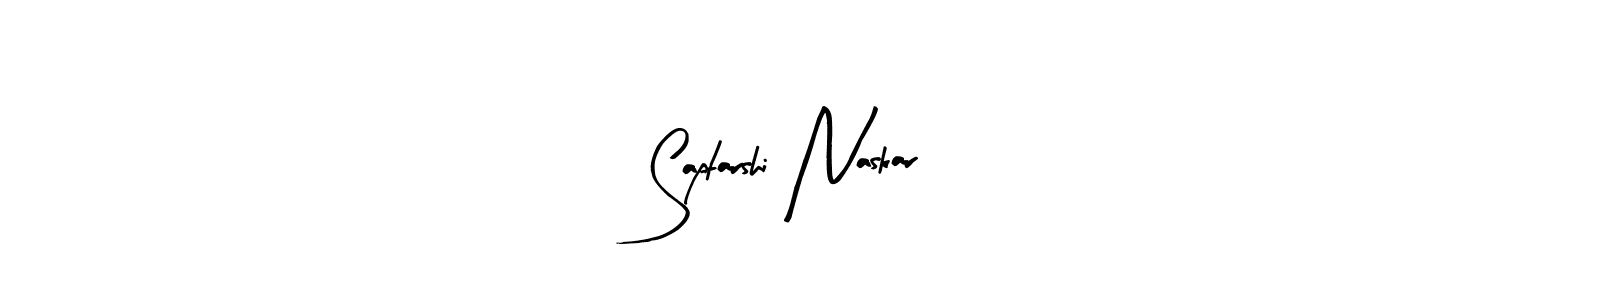 How to make Saptarshi Naskar signature? Arty Signature is a professional autograph style. Create handwritten signature for Saptarshi Naskar name. Saptarshi Naskar signature style 8 images and pictures png